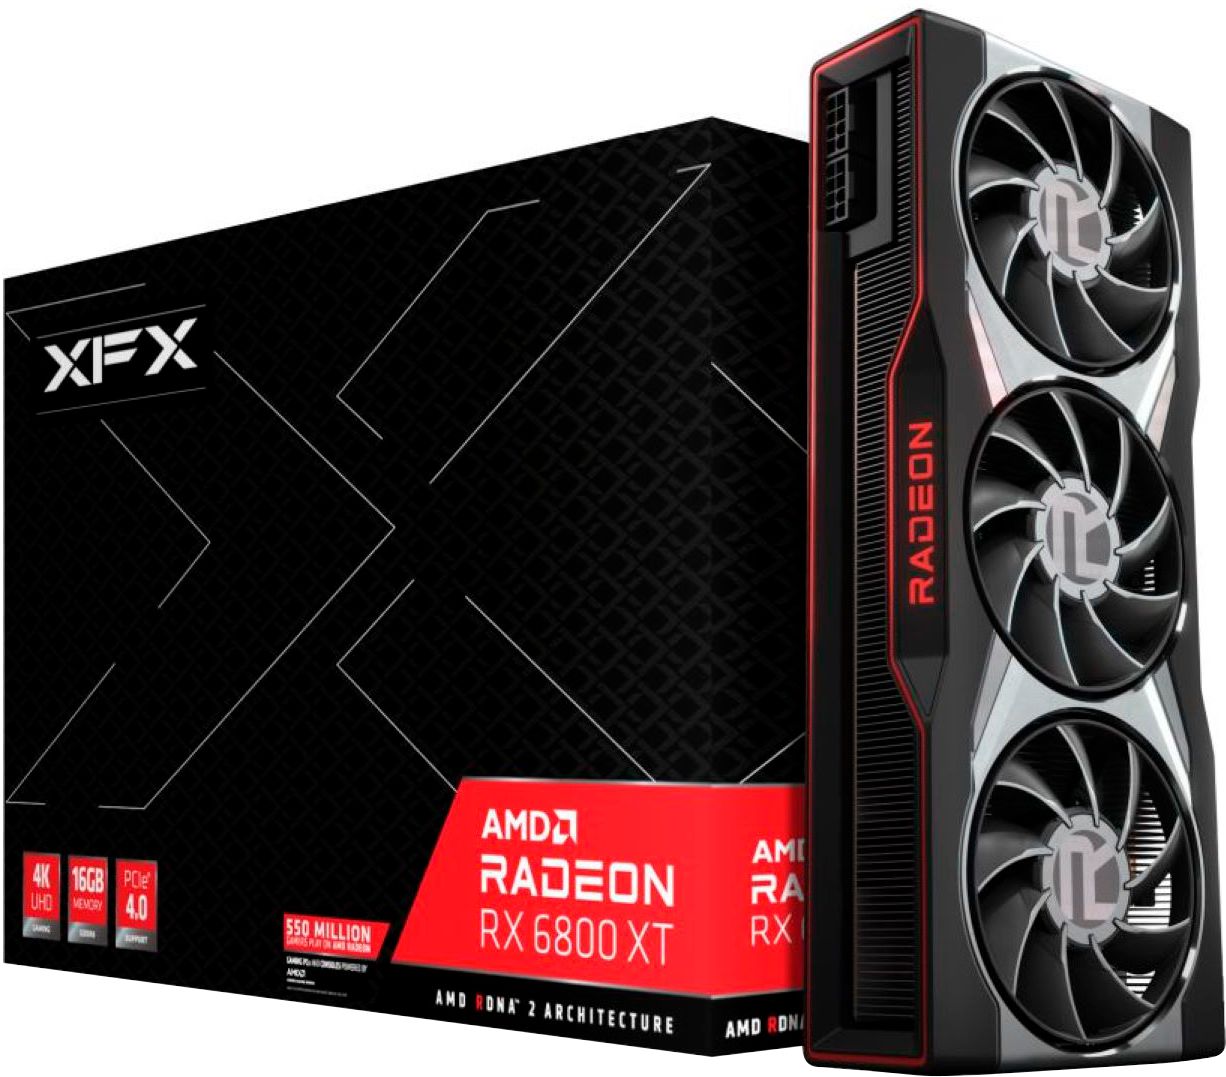 Limited Edition AMD Radeon RX 6800 XT Midnight Black 16GB